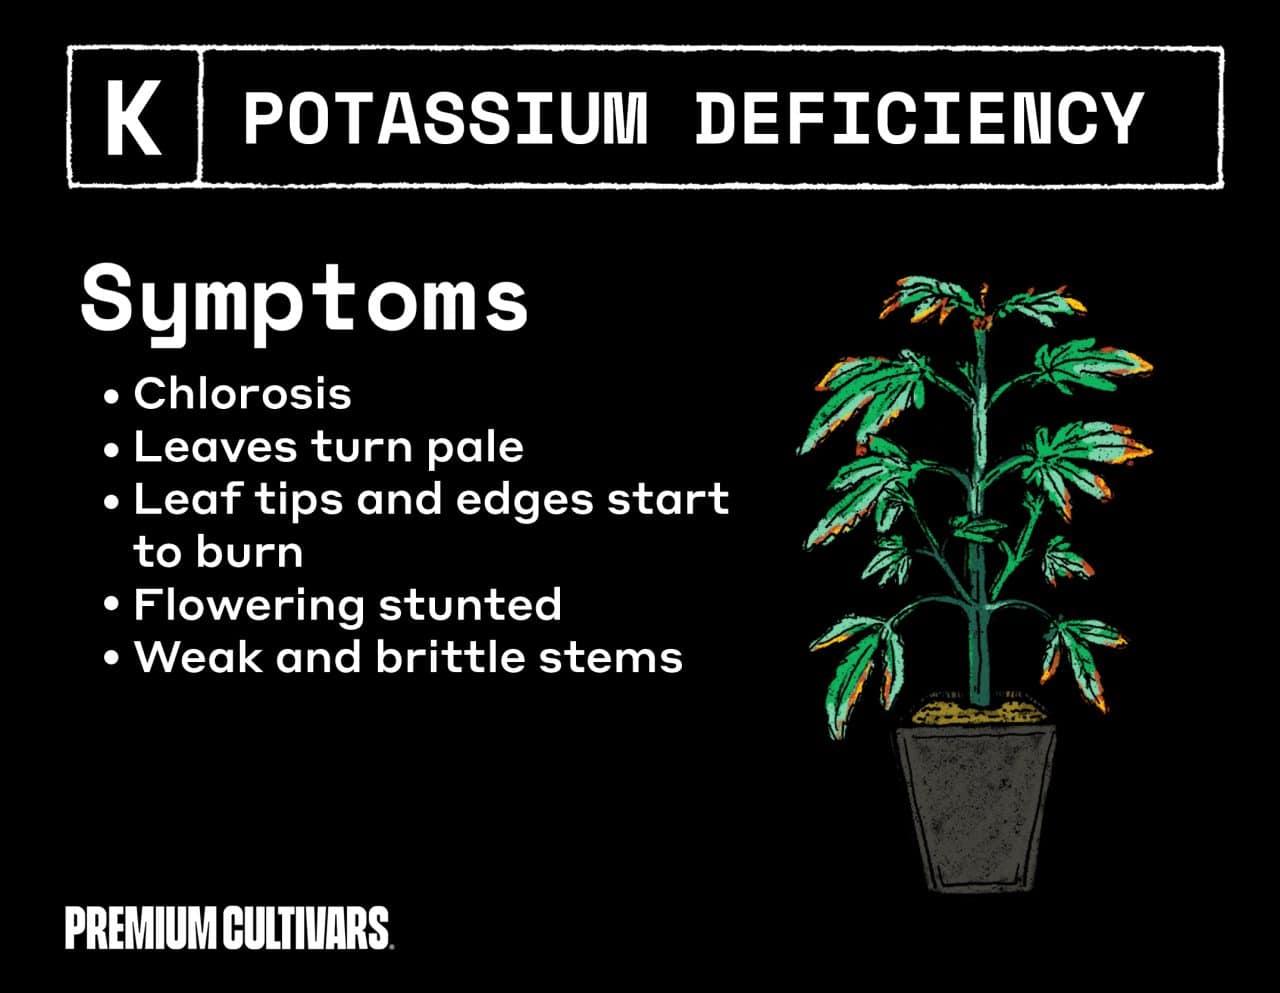 Symptoms of cannabis potassium deficiency